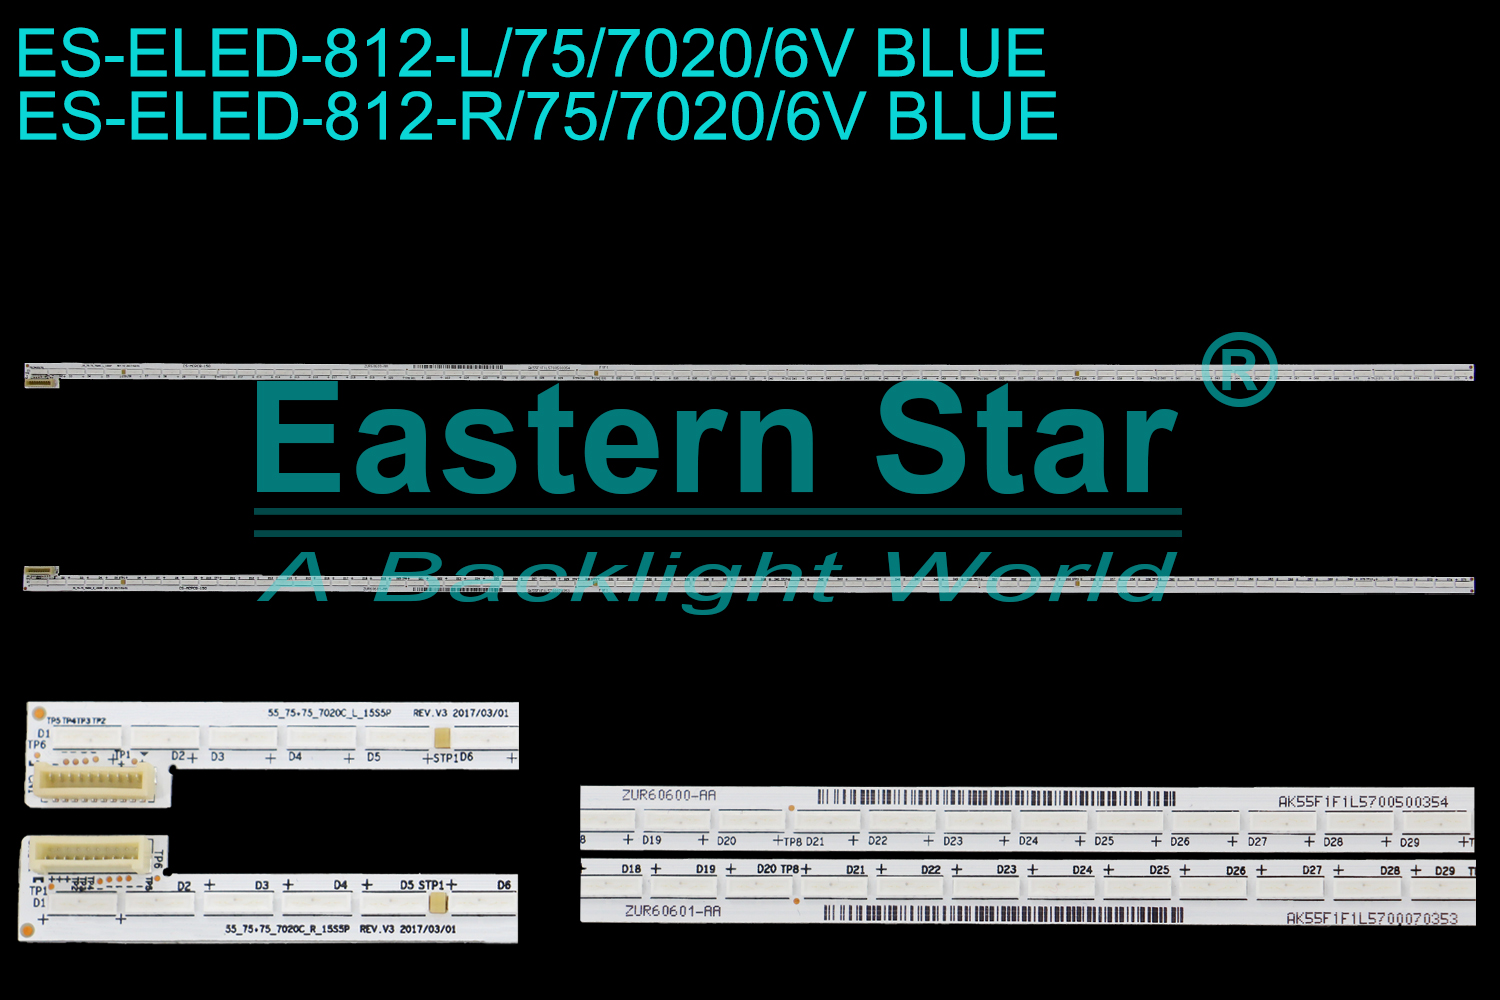 ES-ELED-812 ELED/EDGE TV backlight use for 55'' Arcelik/Beko/Grundig A55L9799 L/R: 55_75+75_7020C_L/R_15S5P REV.V3 2017/03/01 E348435 CS-MCPCB-150 ZUR60600-AA AK55F1F1L5700500354  LED STRIPS(2)